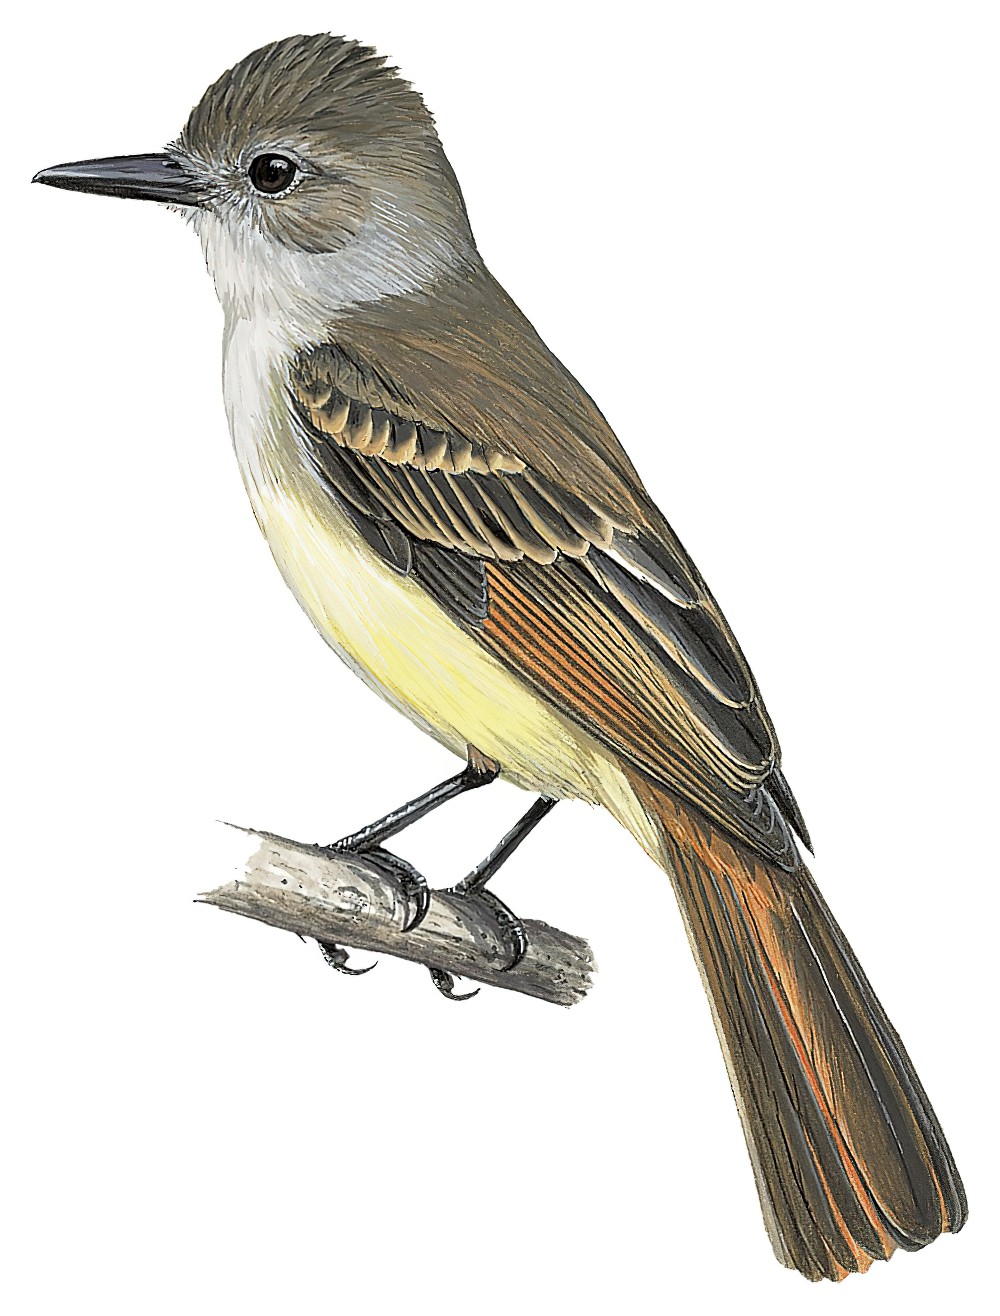 Lesser Antillean Flycatcher / Myiarchus oberi